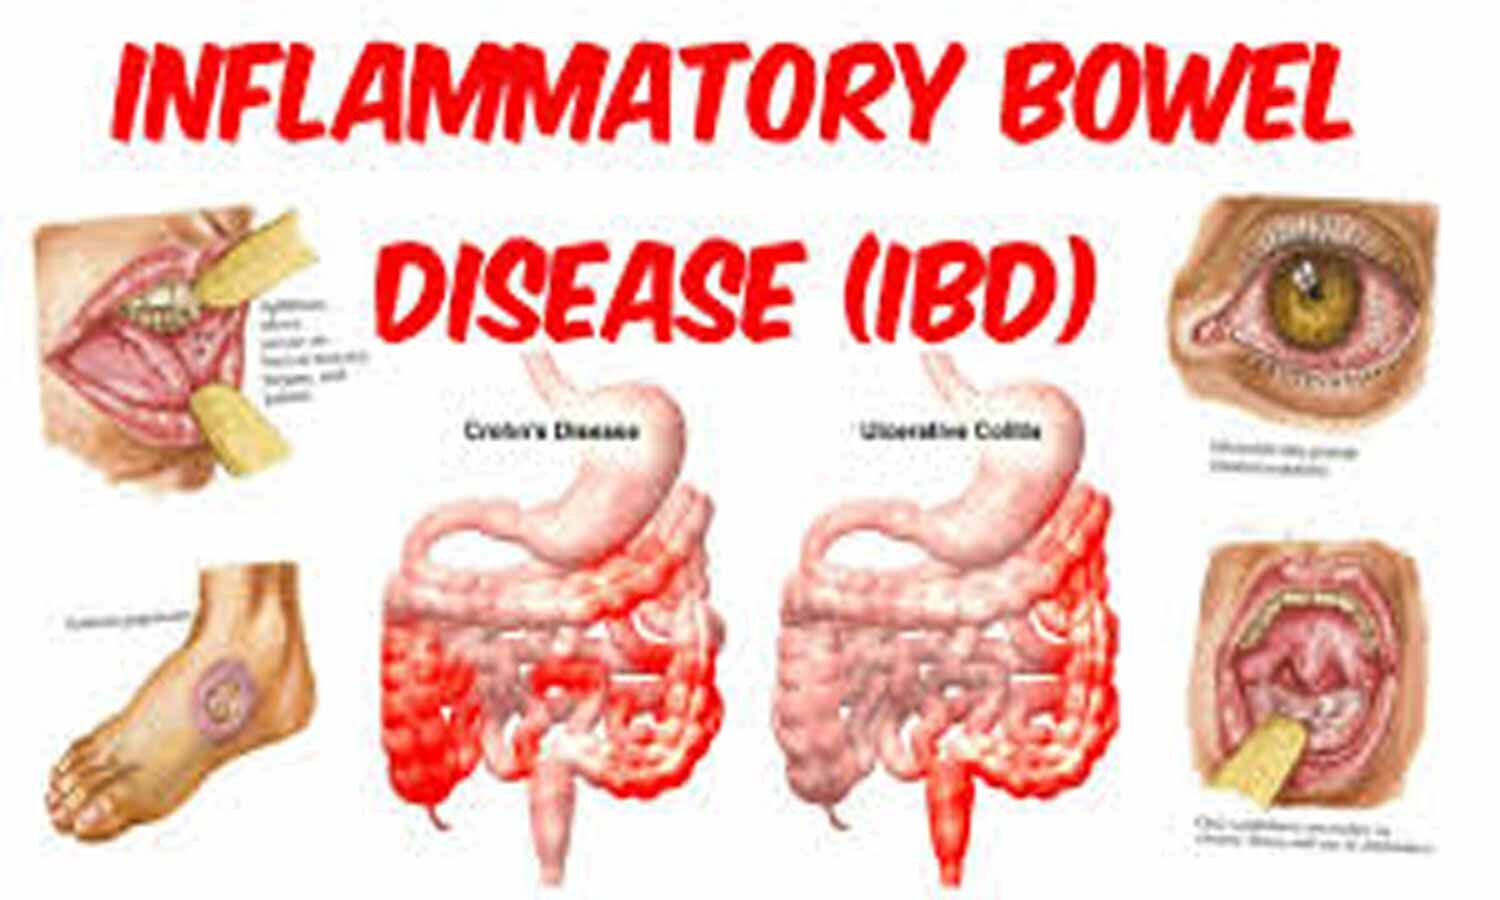 Treatment Of Inflammatory Bowel Disease Ibd Best Homeopathy Doctor In India Us Uk Europe